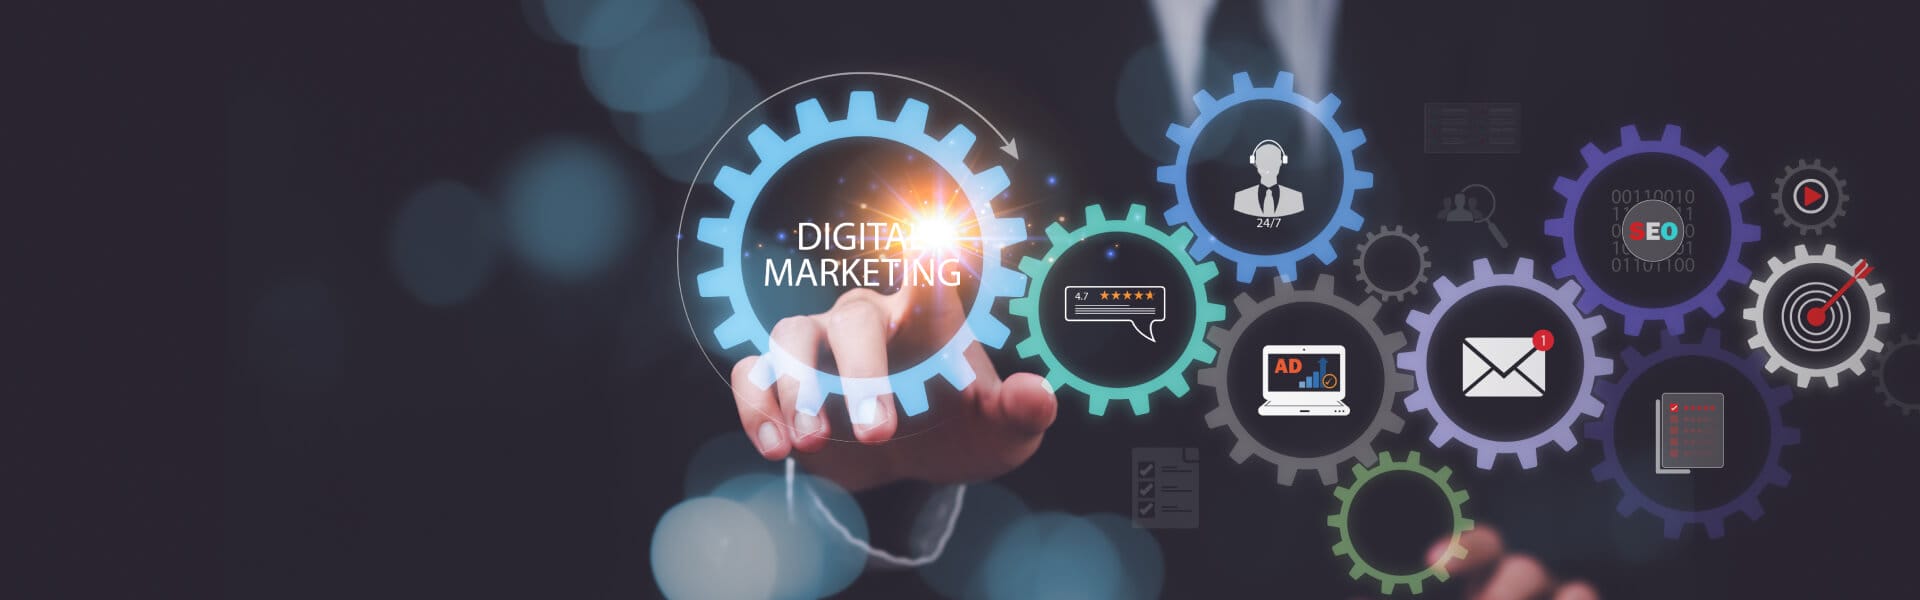 Digital Marketing Services - QuellSoft